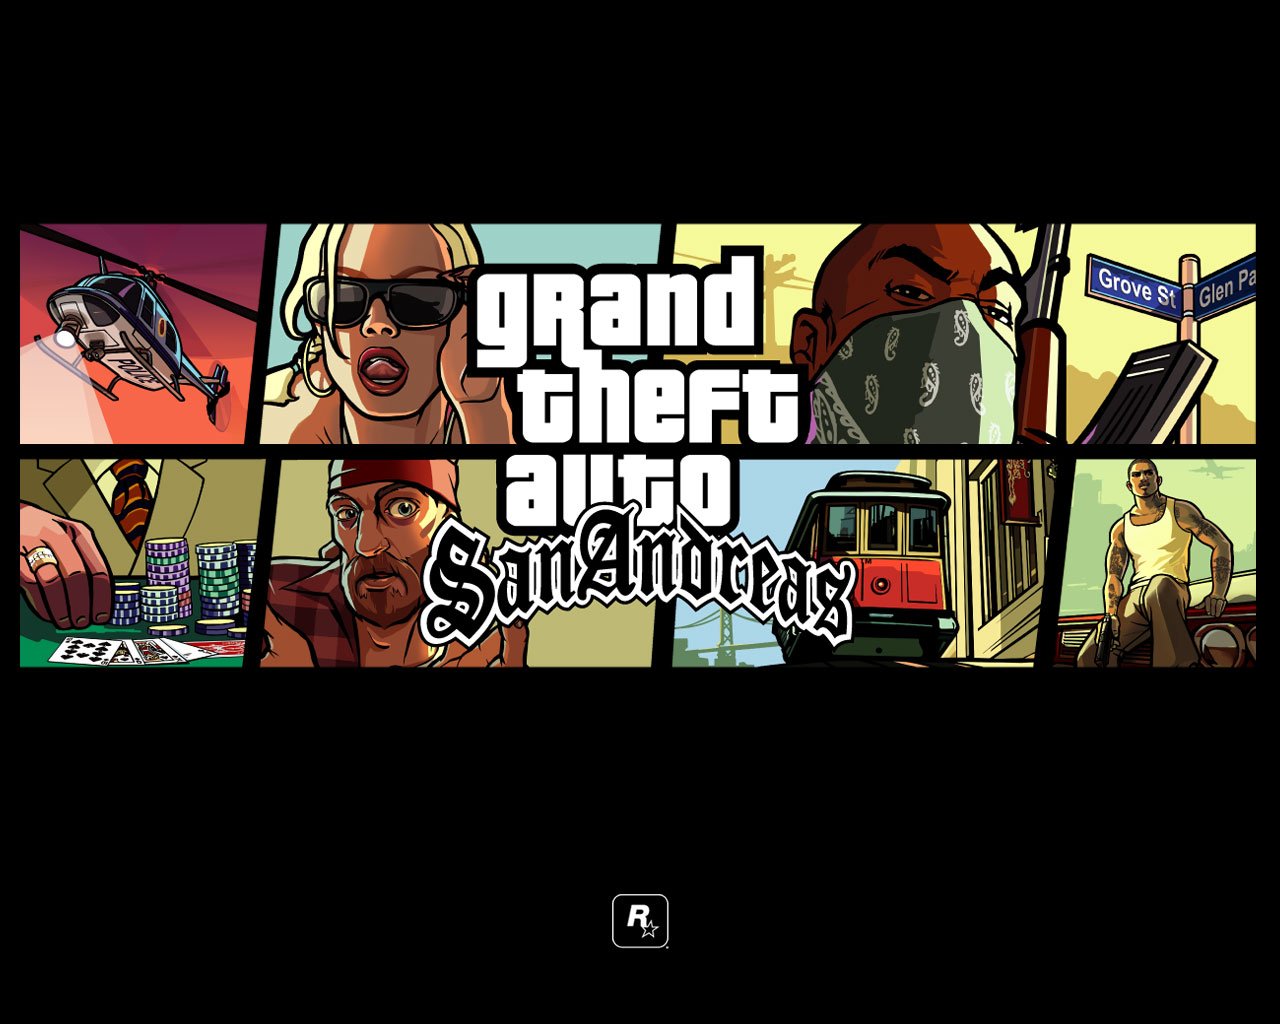 Download Grand Theft Auto: GTA San Andreas jetzt im App Store 6